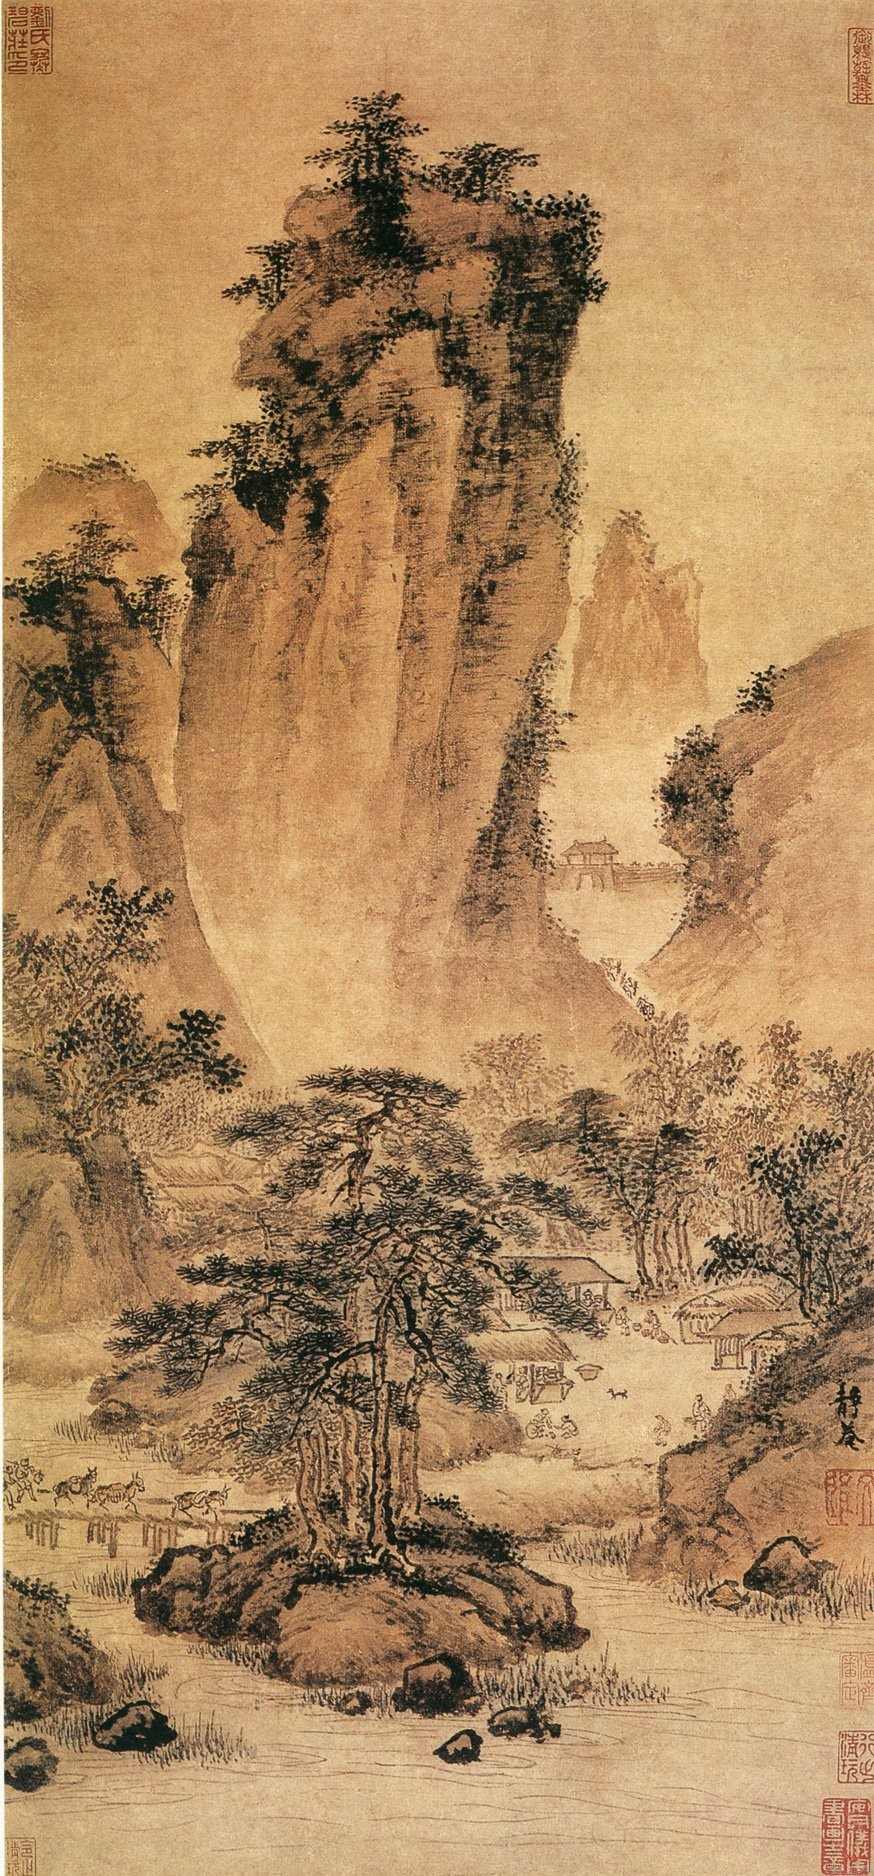 https://upload.wikimedia.org/wikipedia/commons/b/b4/Dai_Jin-Travelers_Through_Mountain_Passes.jpg